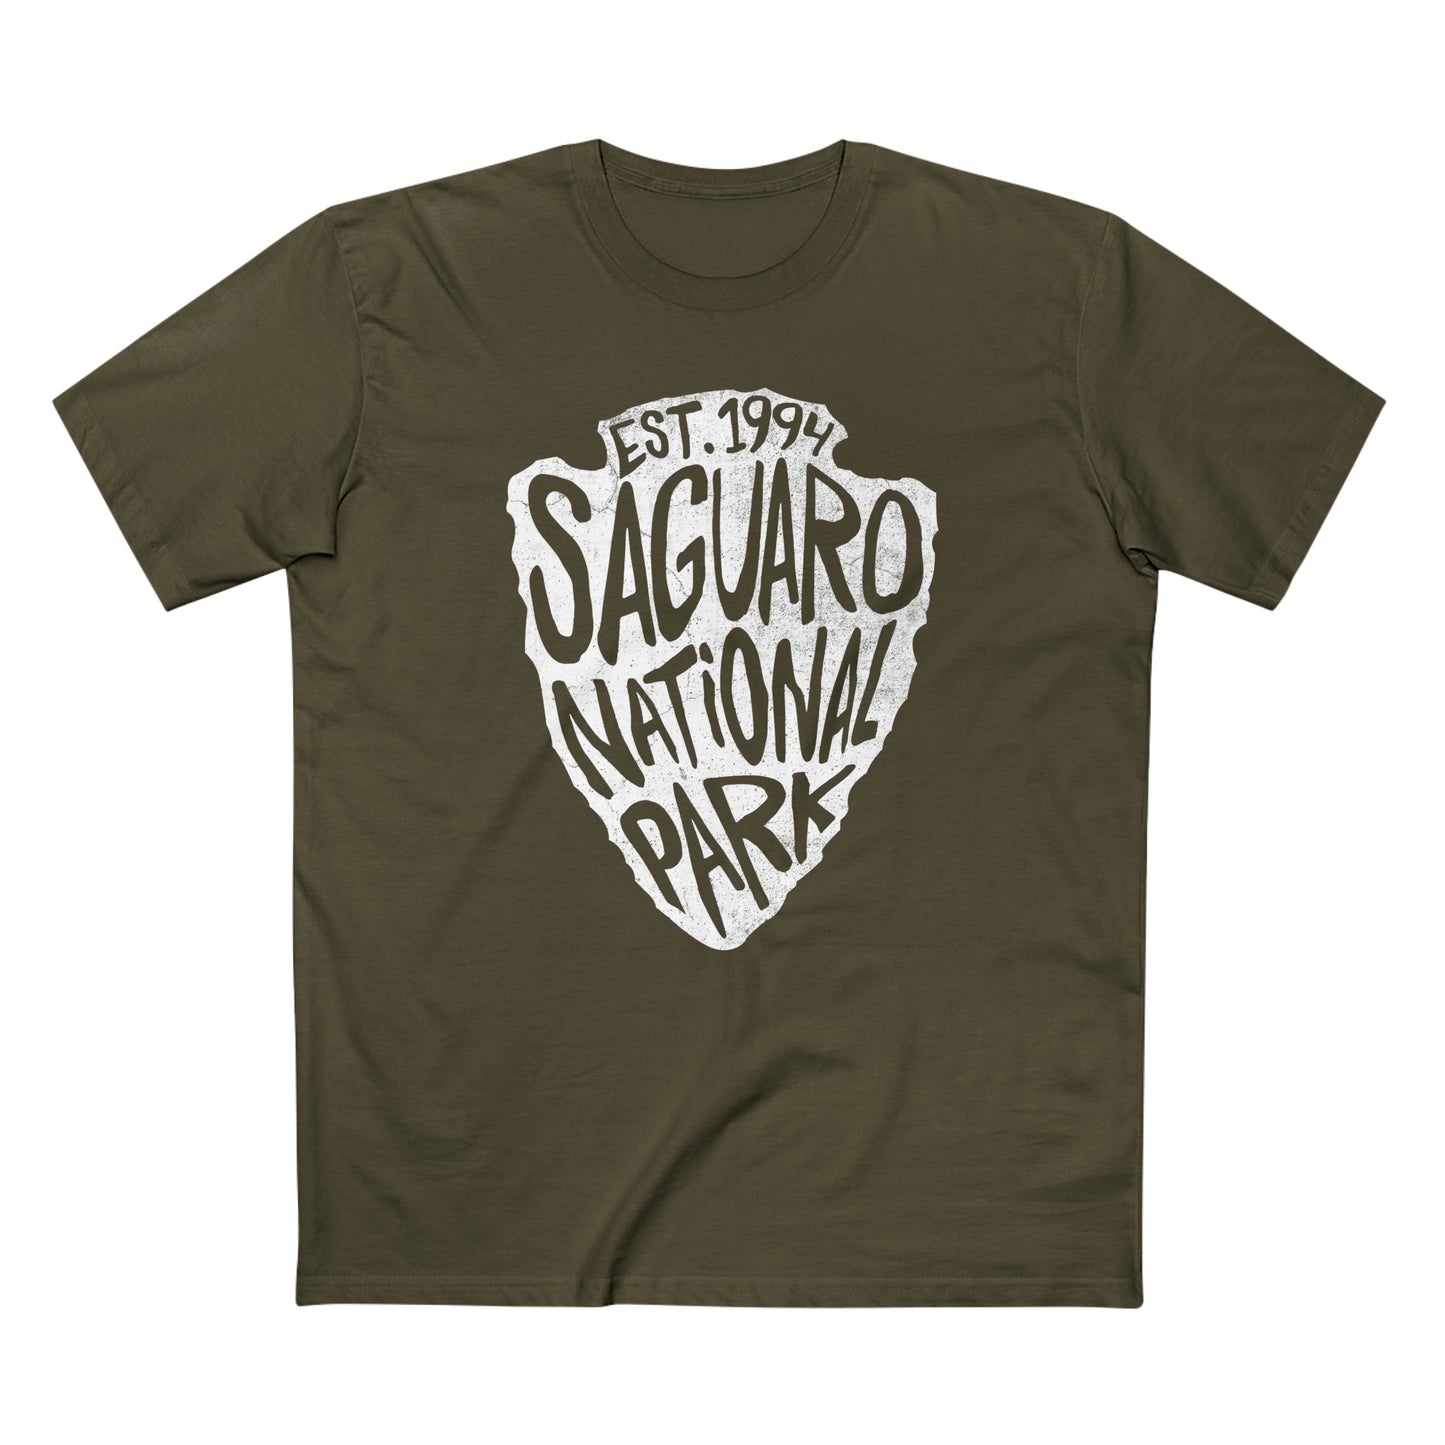 Saguaro National Park T-Shirt - Arrow Head Design